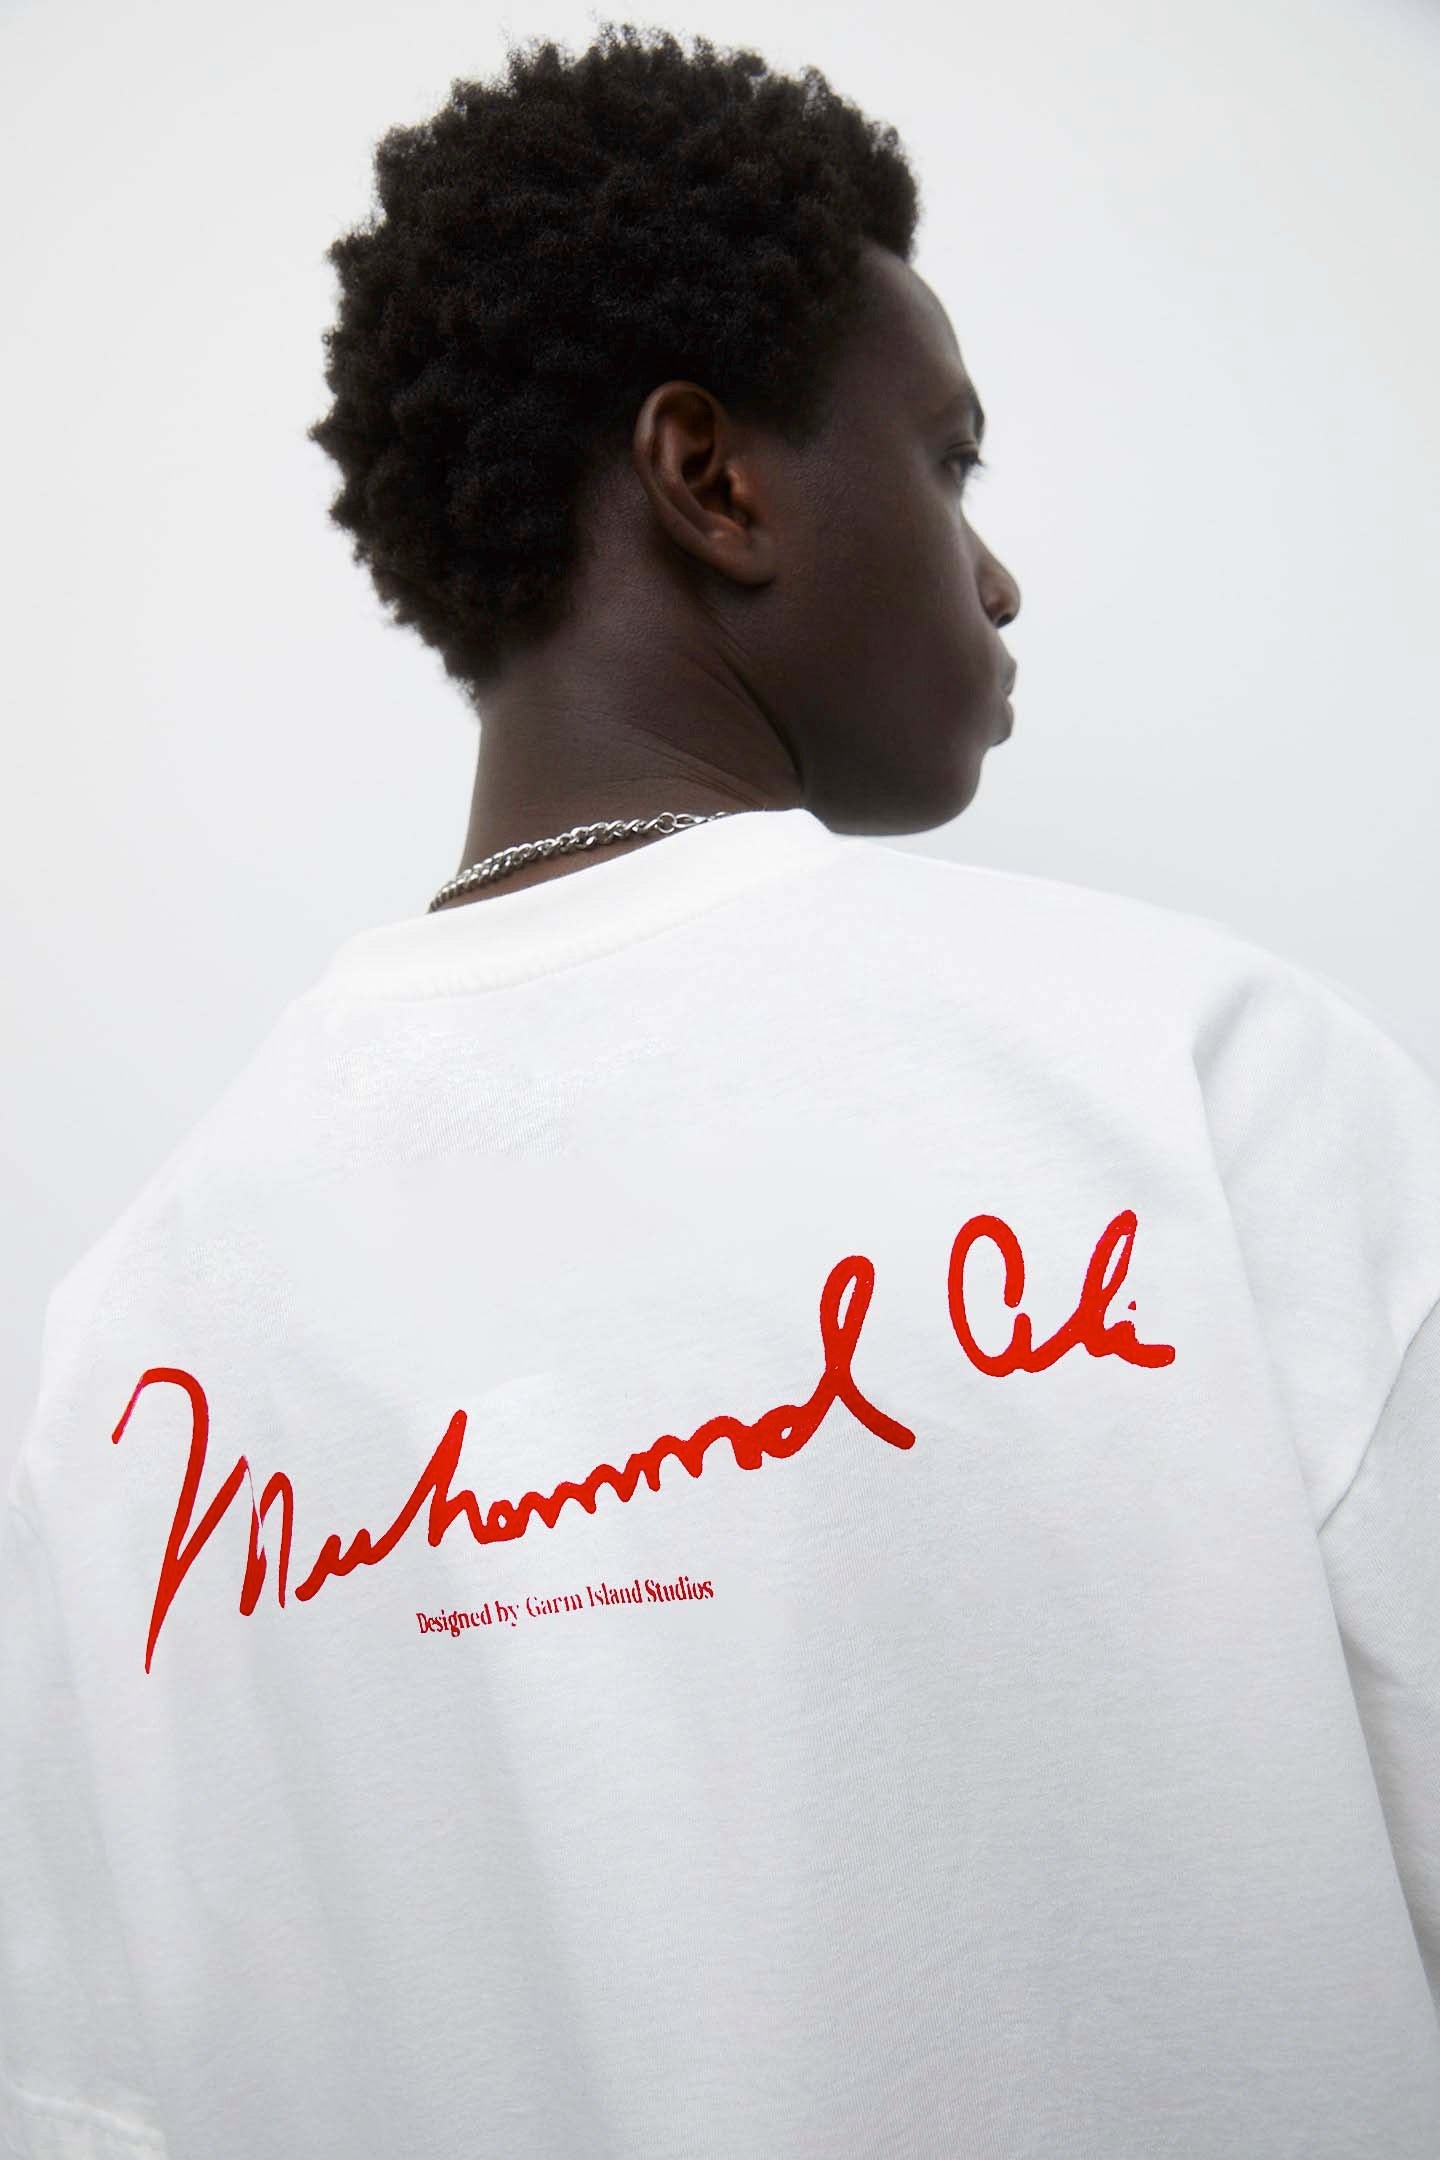 Garm Island Muhammad Ali Graphic T-shirt in white